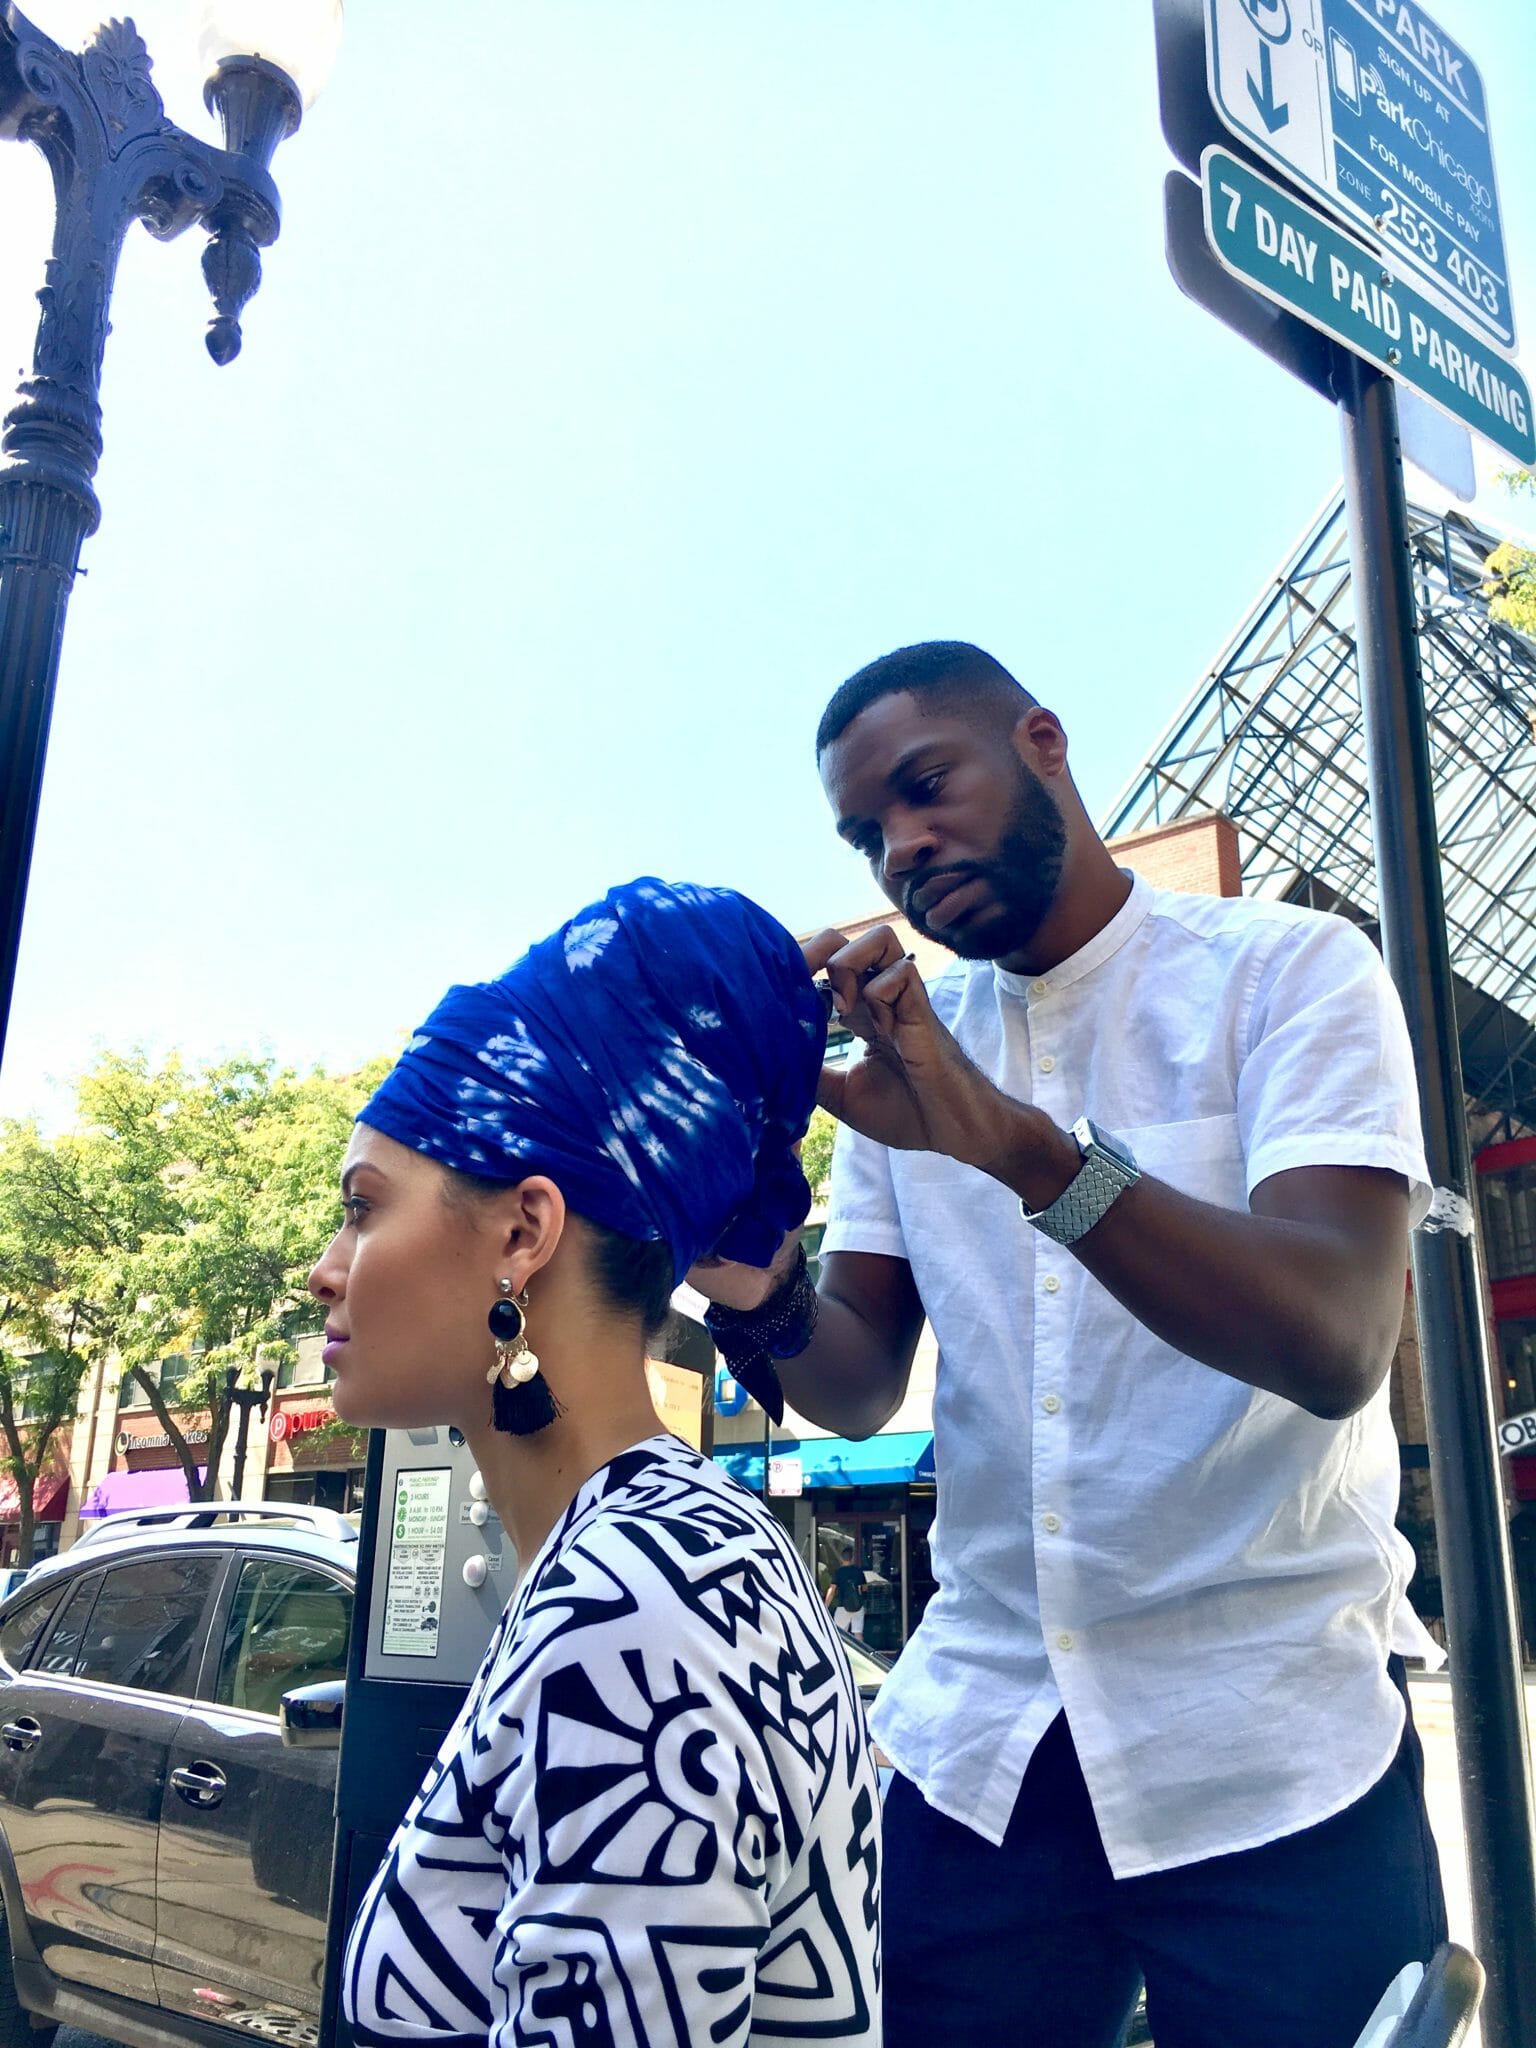 A Black man in a white shirt adjusting a blue headwrap on a black woman.